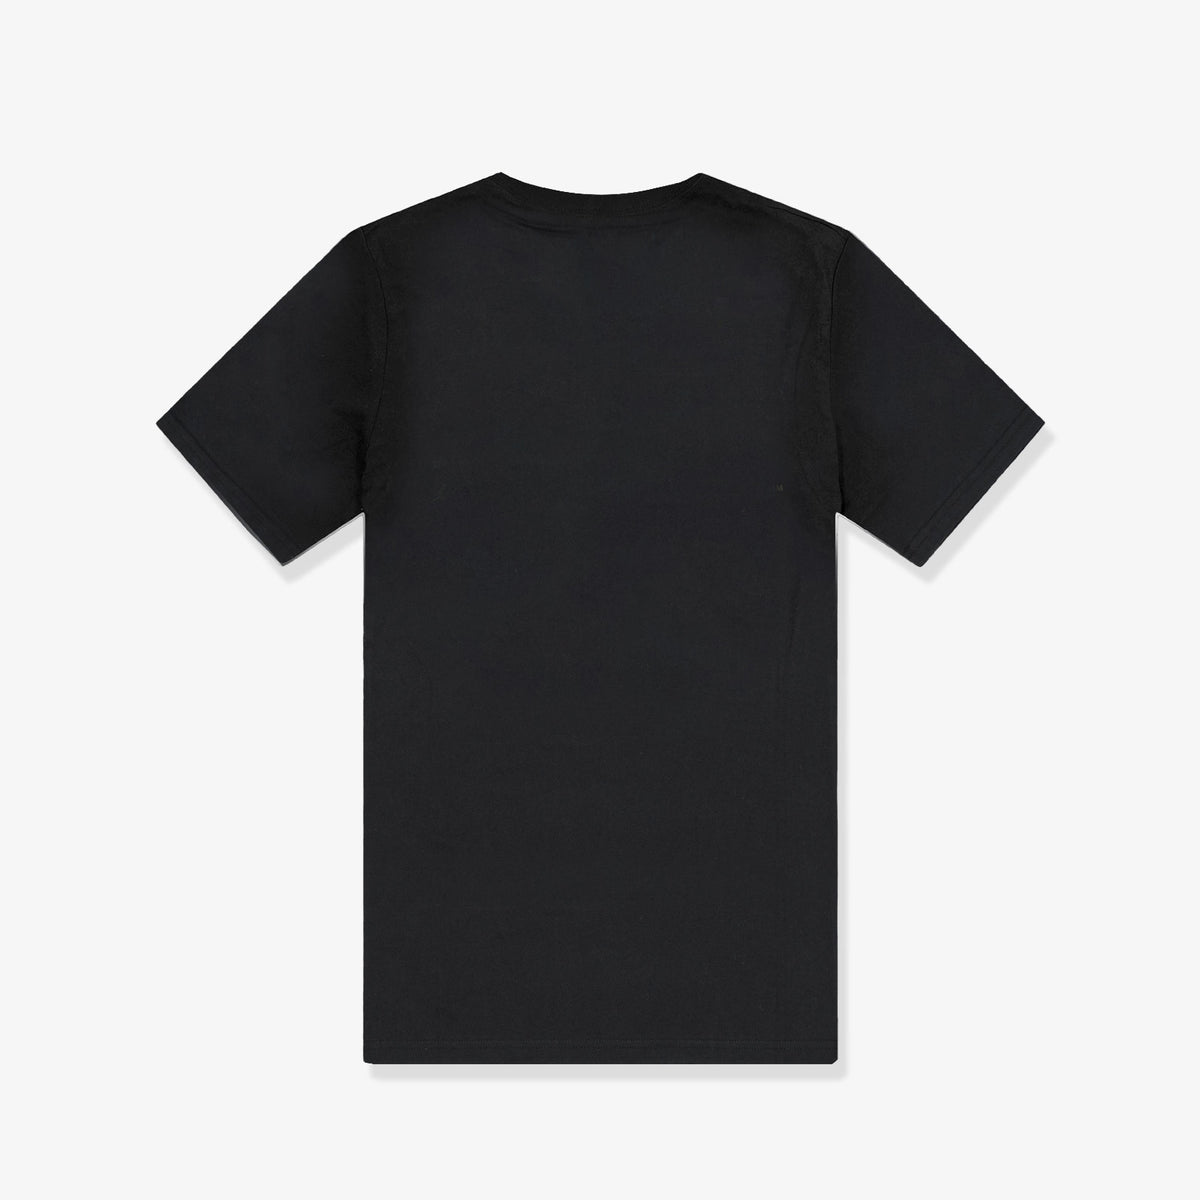 Jordan Jumpman Air Kids T-Shirt - Black